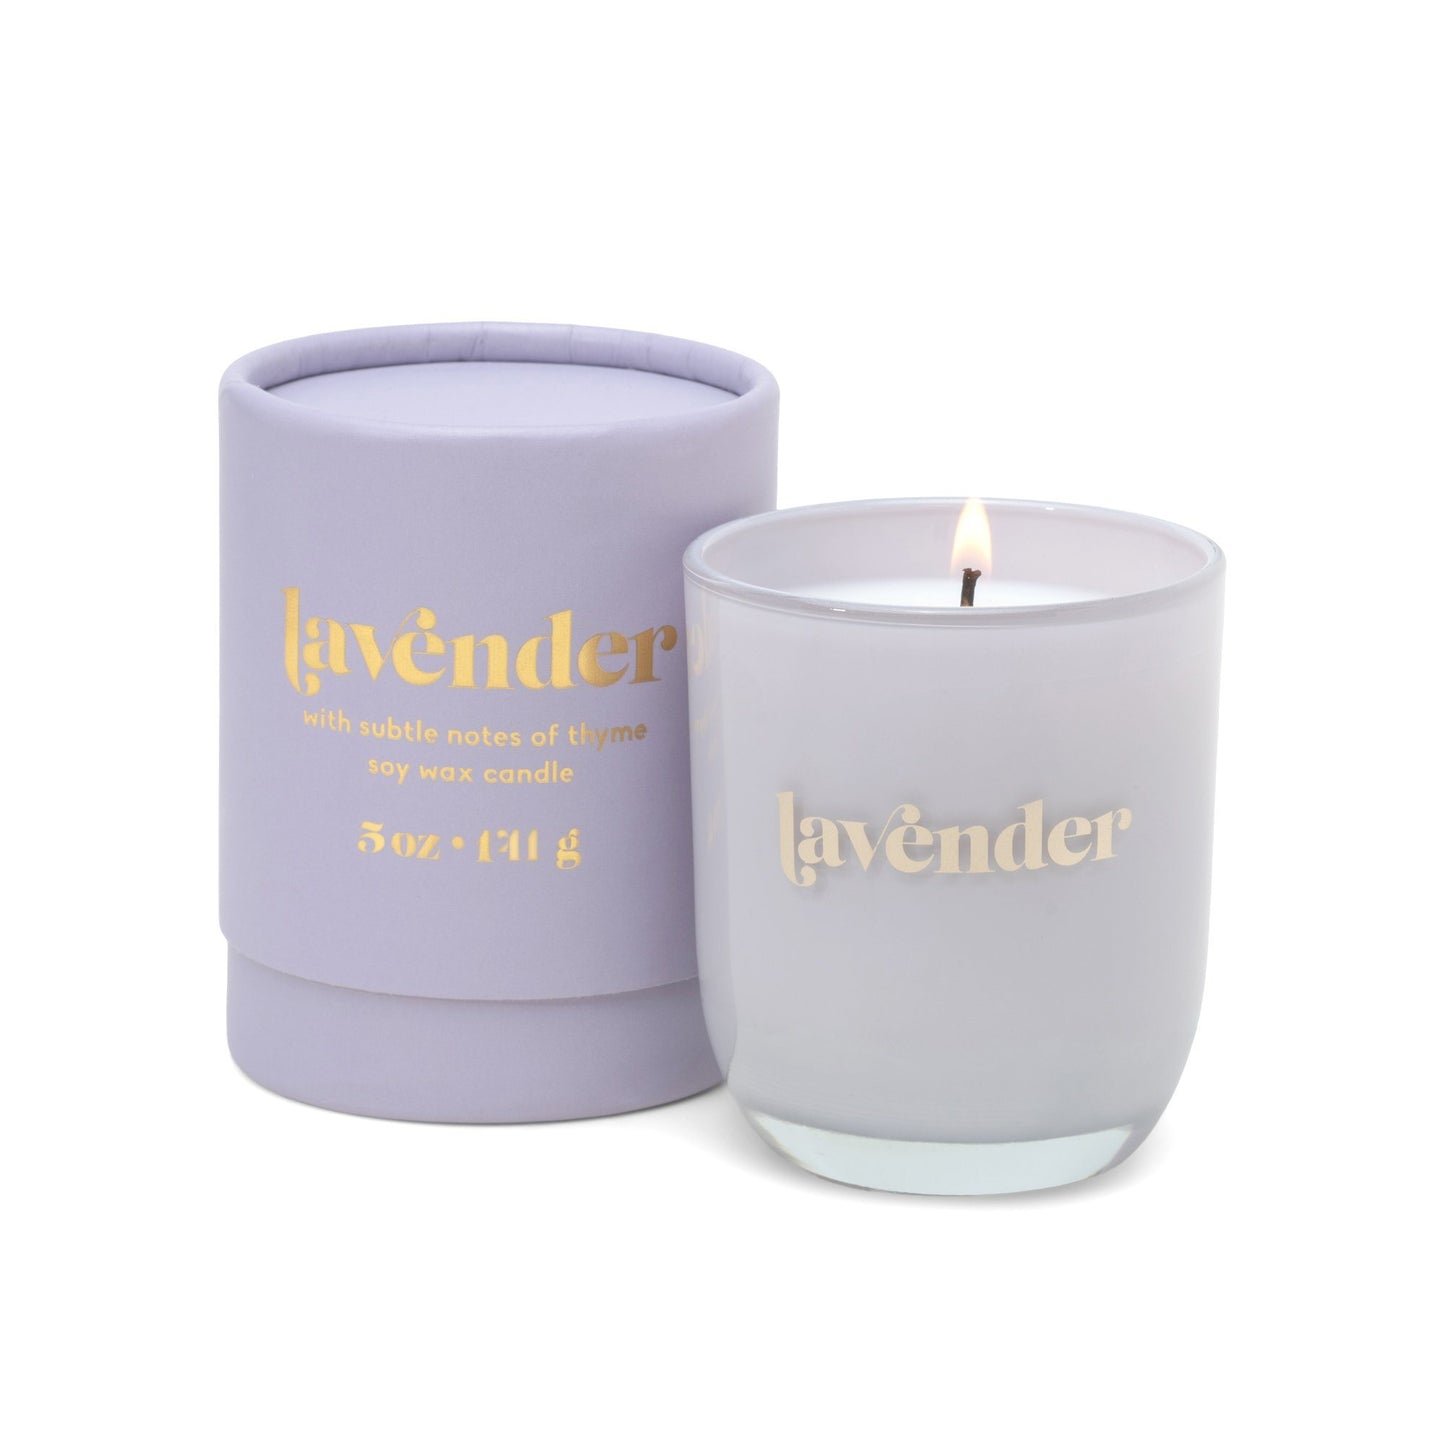 Petite 5 oz Candle - Lavender - purple colored glass vessel